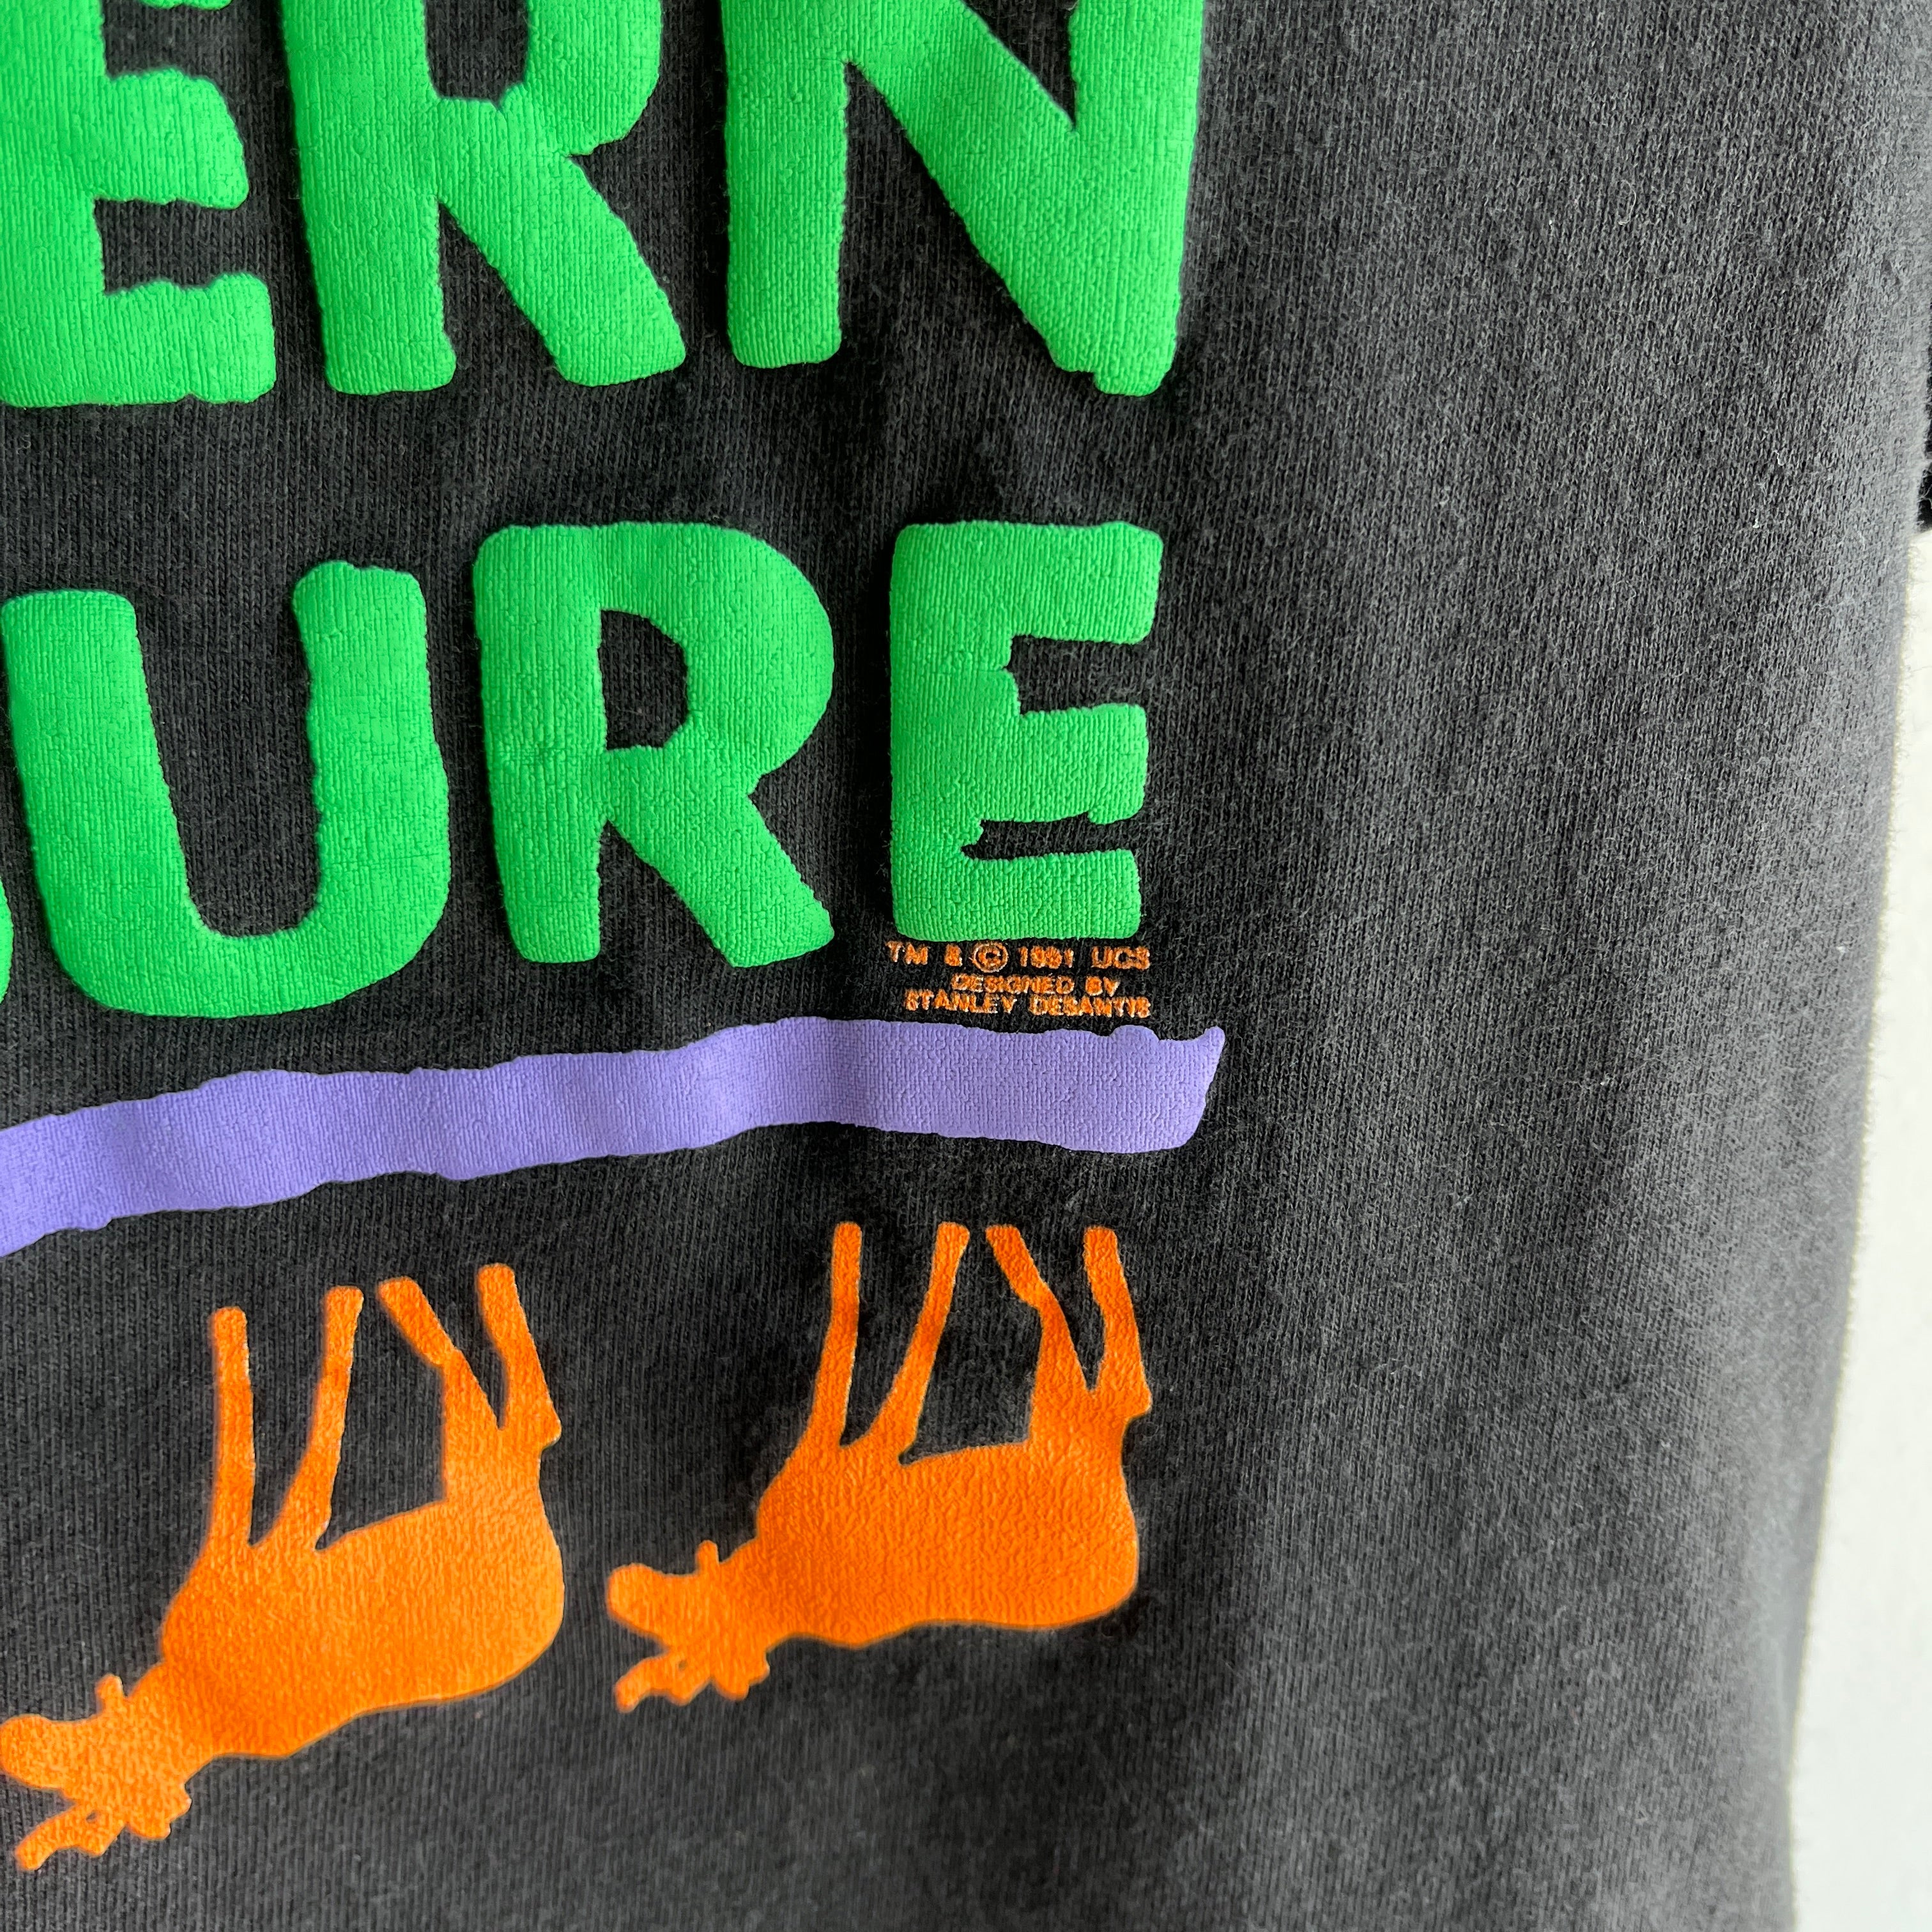 1980s Northern Exposure Moose T-Shirt